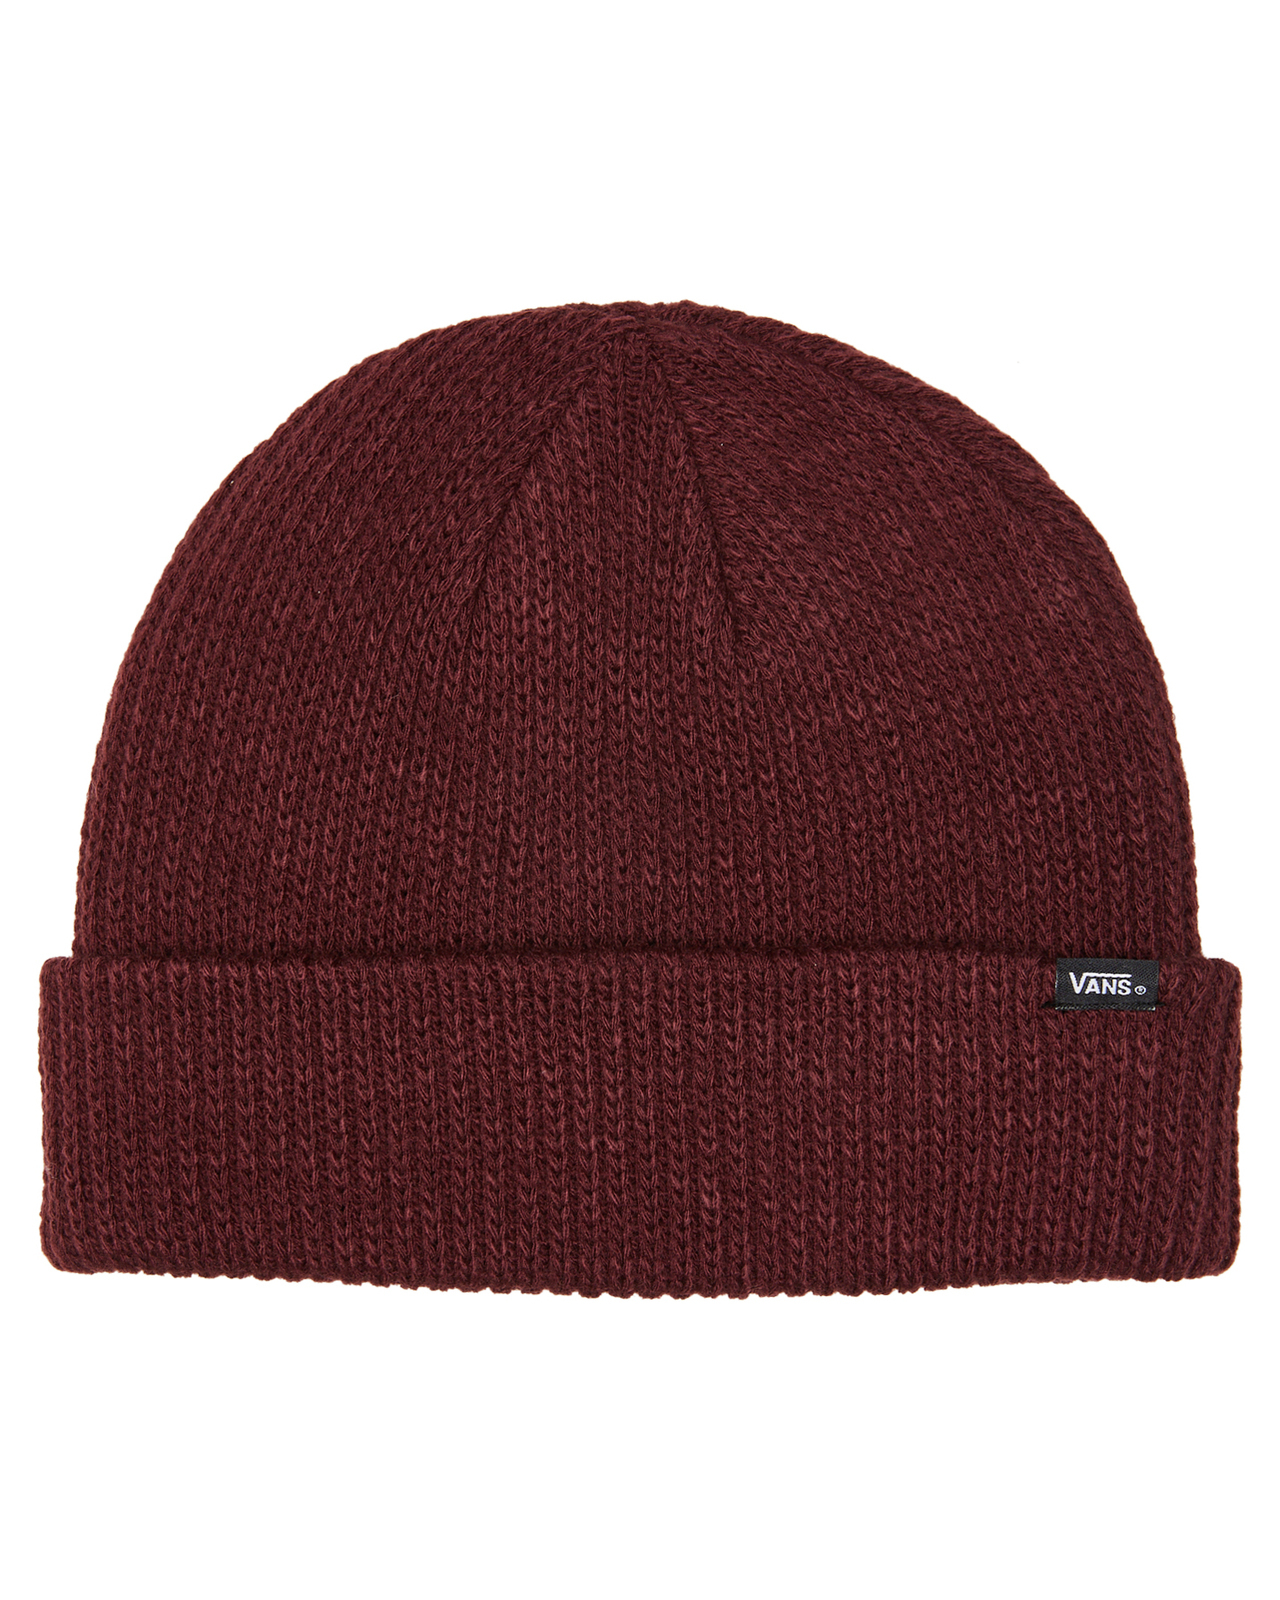 VANS,Core Basics Beanie Warm Winter Knit Hat Ski Cap - Port Royale